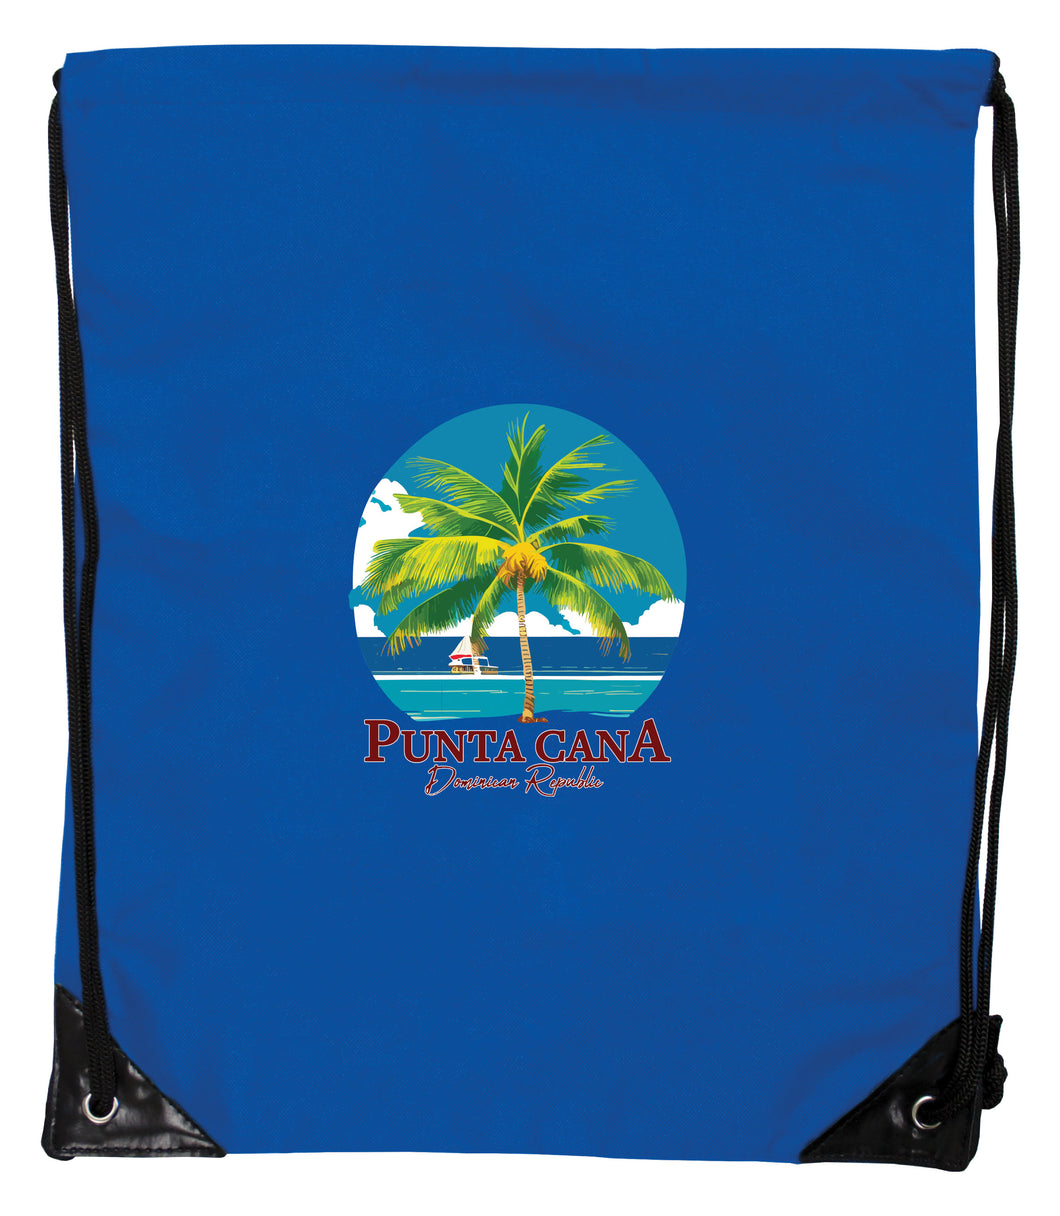 Punta Cana Dominican Republic Souvenir Cinch Bag with Drawstring Backpack